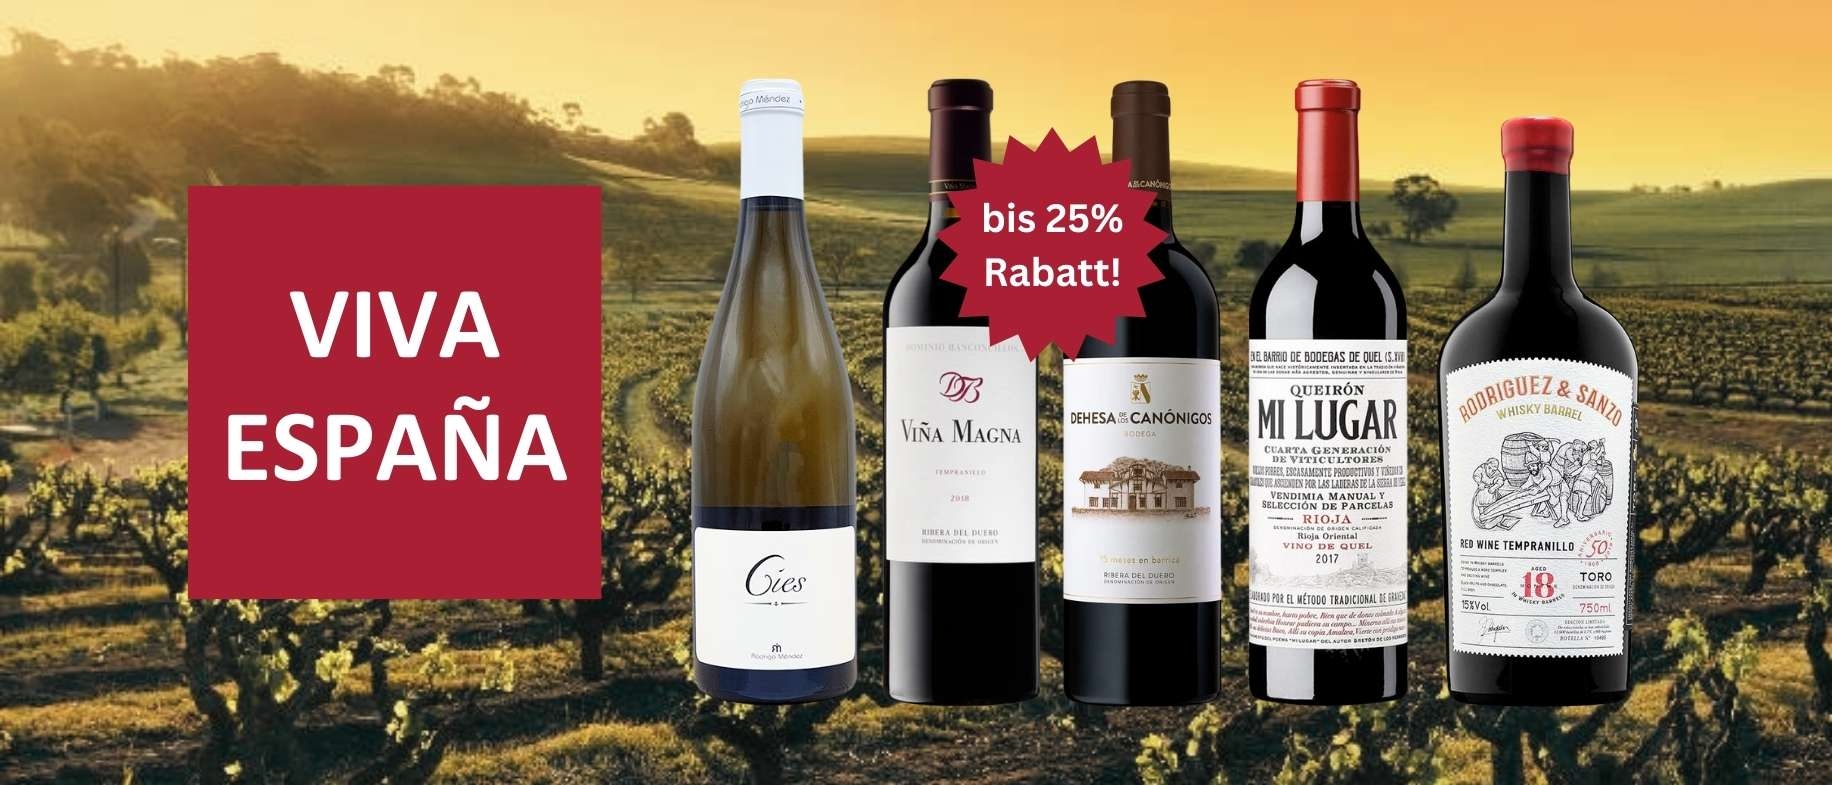 viva espana beste spanische Weine online kaufen Weber-Vonesch Zug 25% rabatt discount